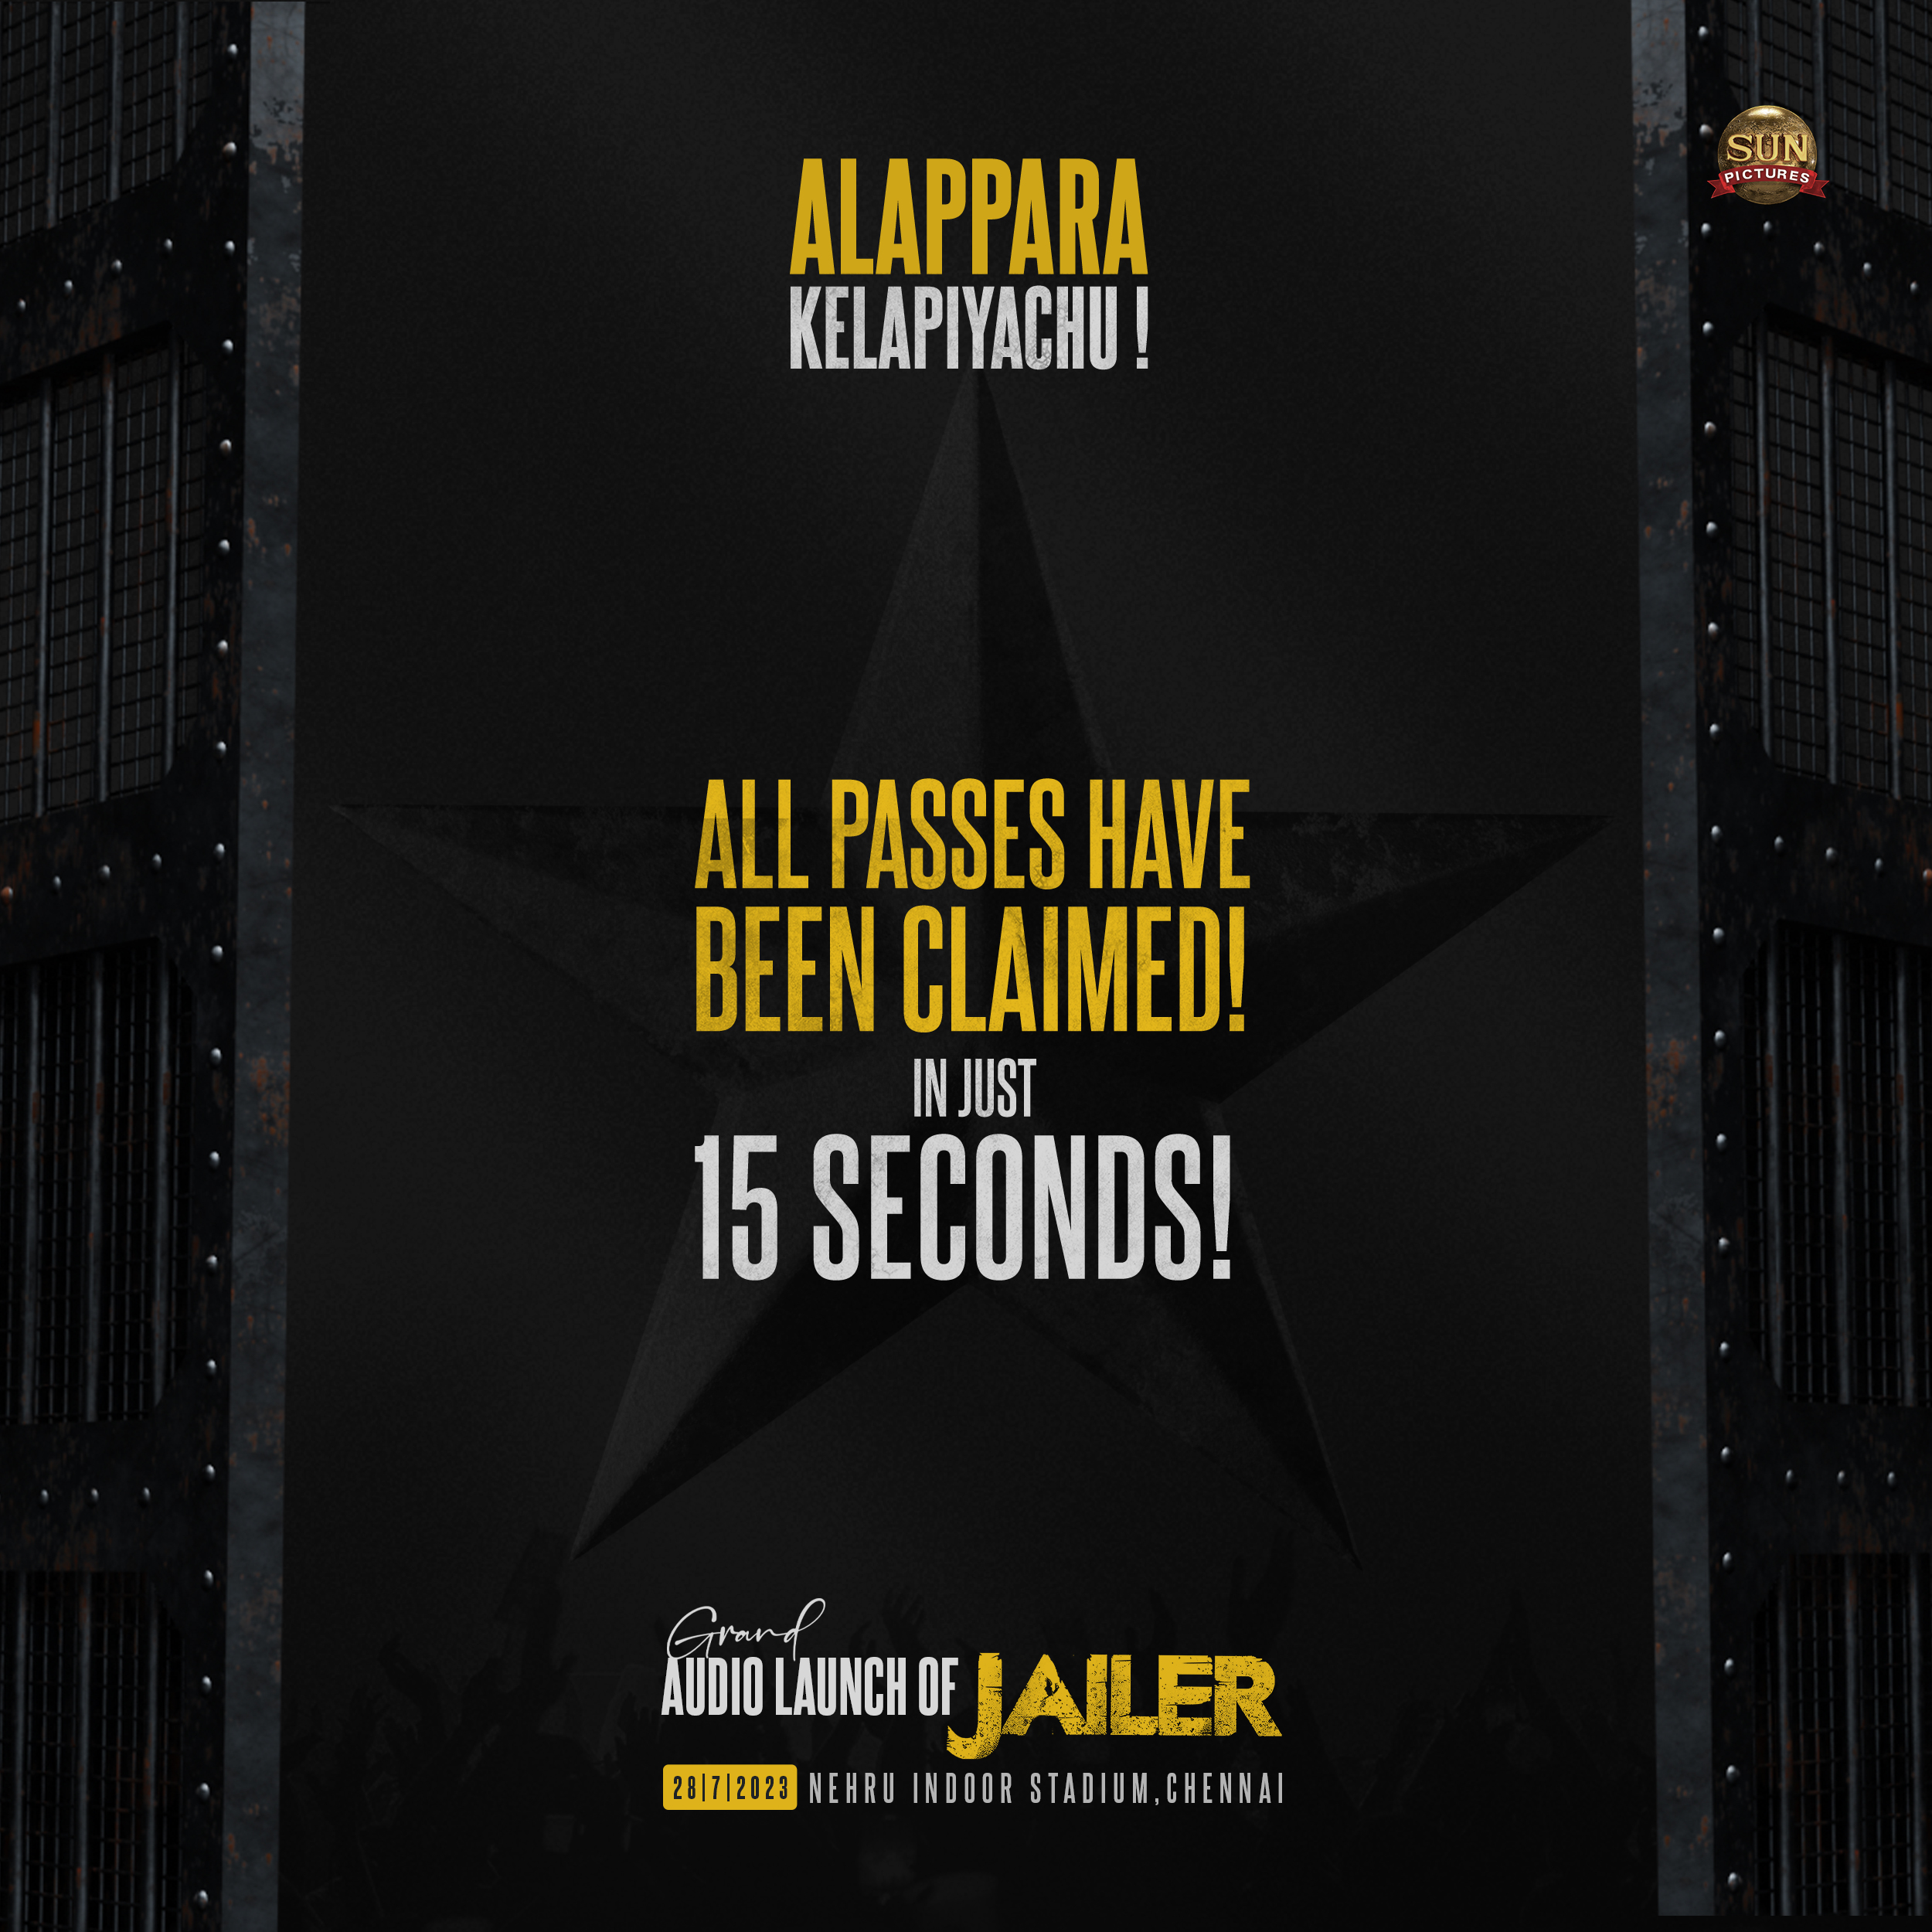 jailer audio launch pass